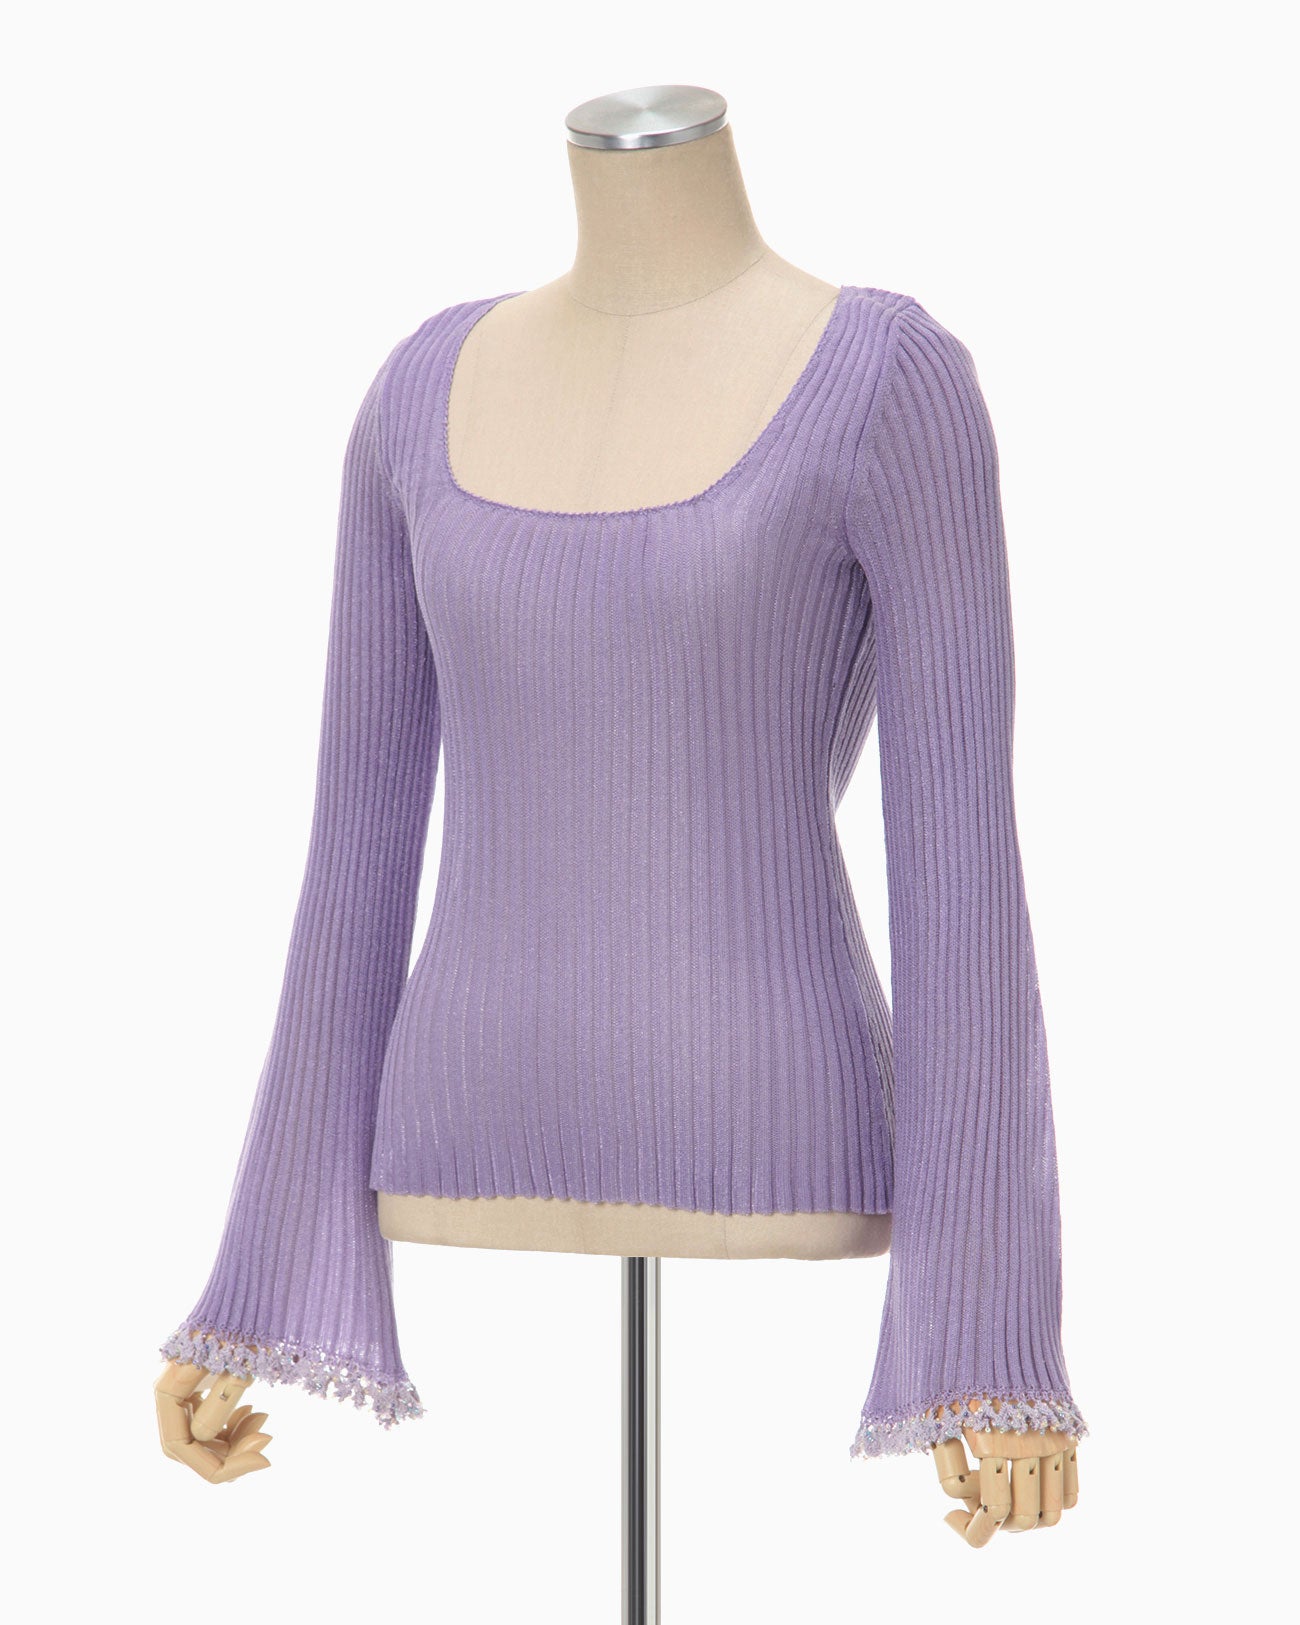 Beaded Flared Sleeve Knit Top - purple smcint.com